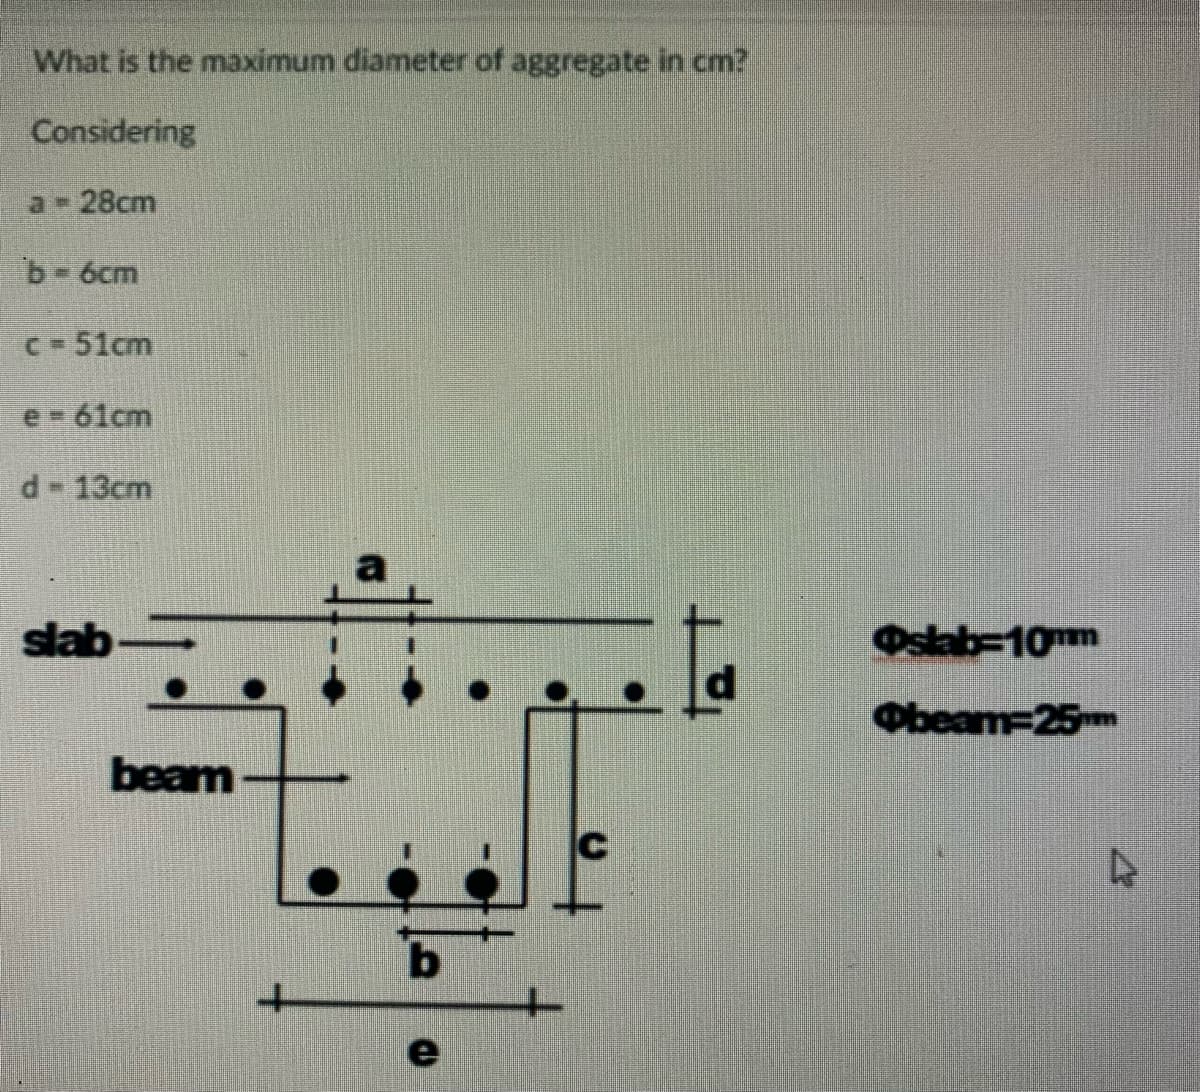 What is the maximum diameter of aggregate in cm?
Considering
a = 28cm
b = 6cm
c = 51cm
e-61cm
d-13cm
slab
beam
e
Oslab=10⁰m
Obeam=25m